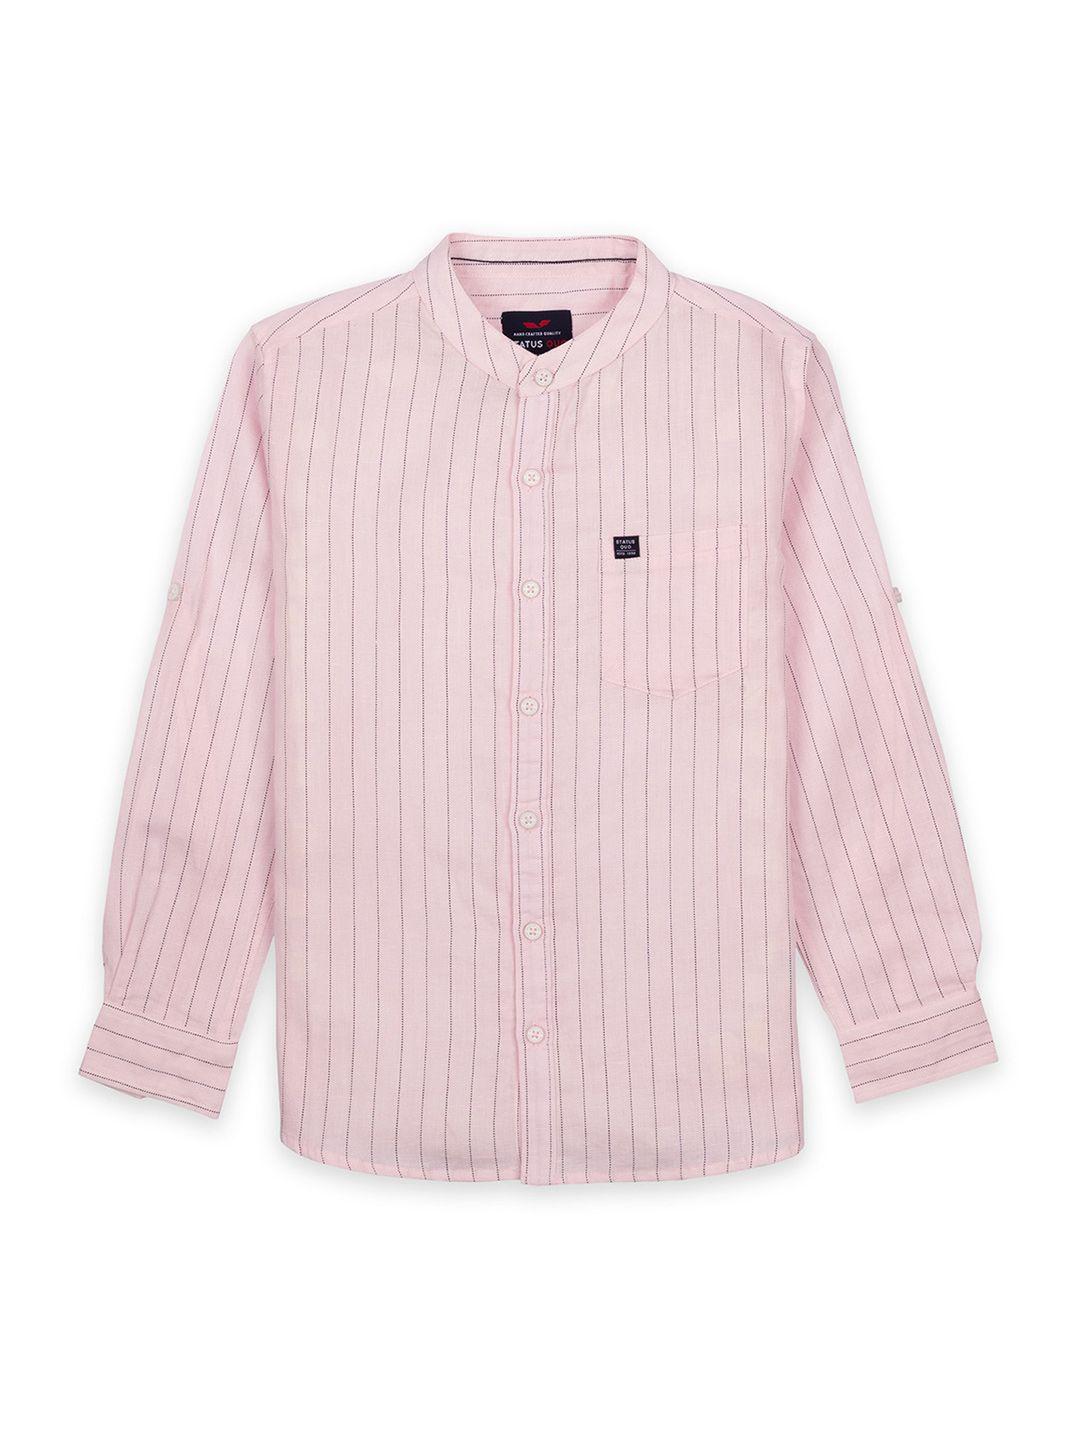 status quo boys pink classic striped regular cotton casual shirt